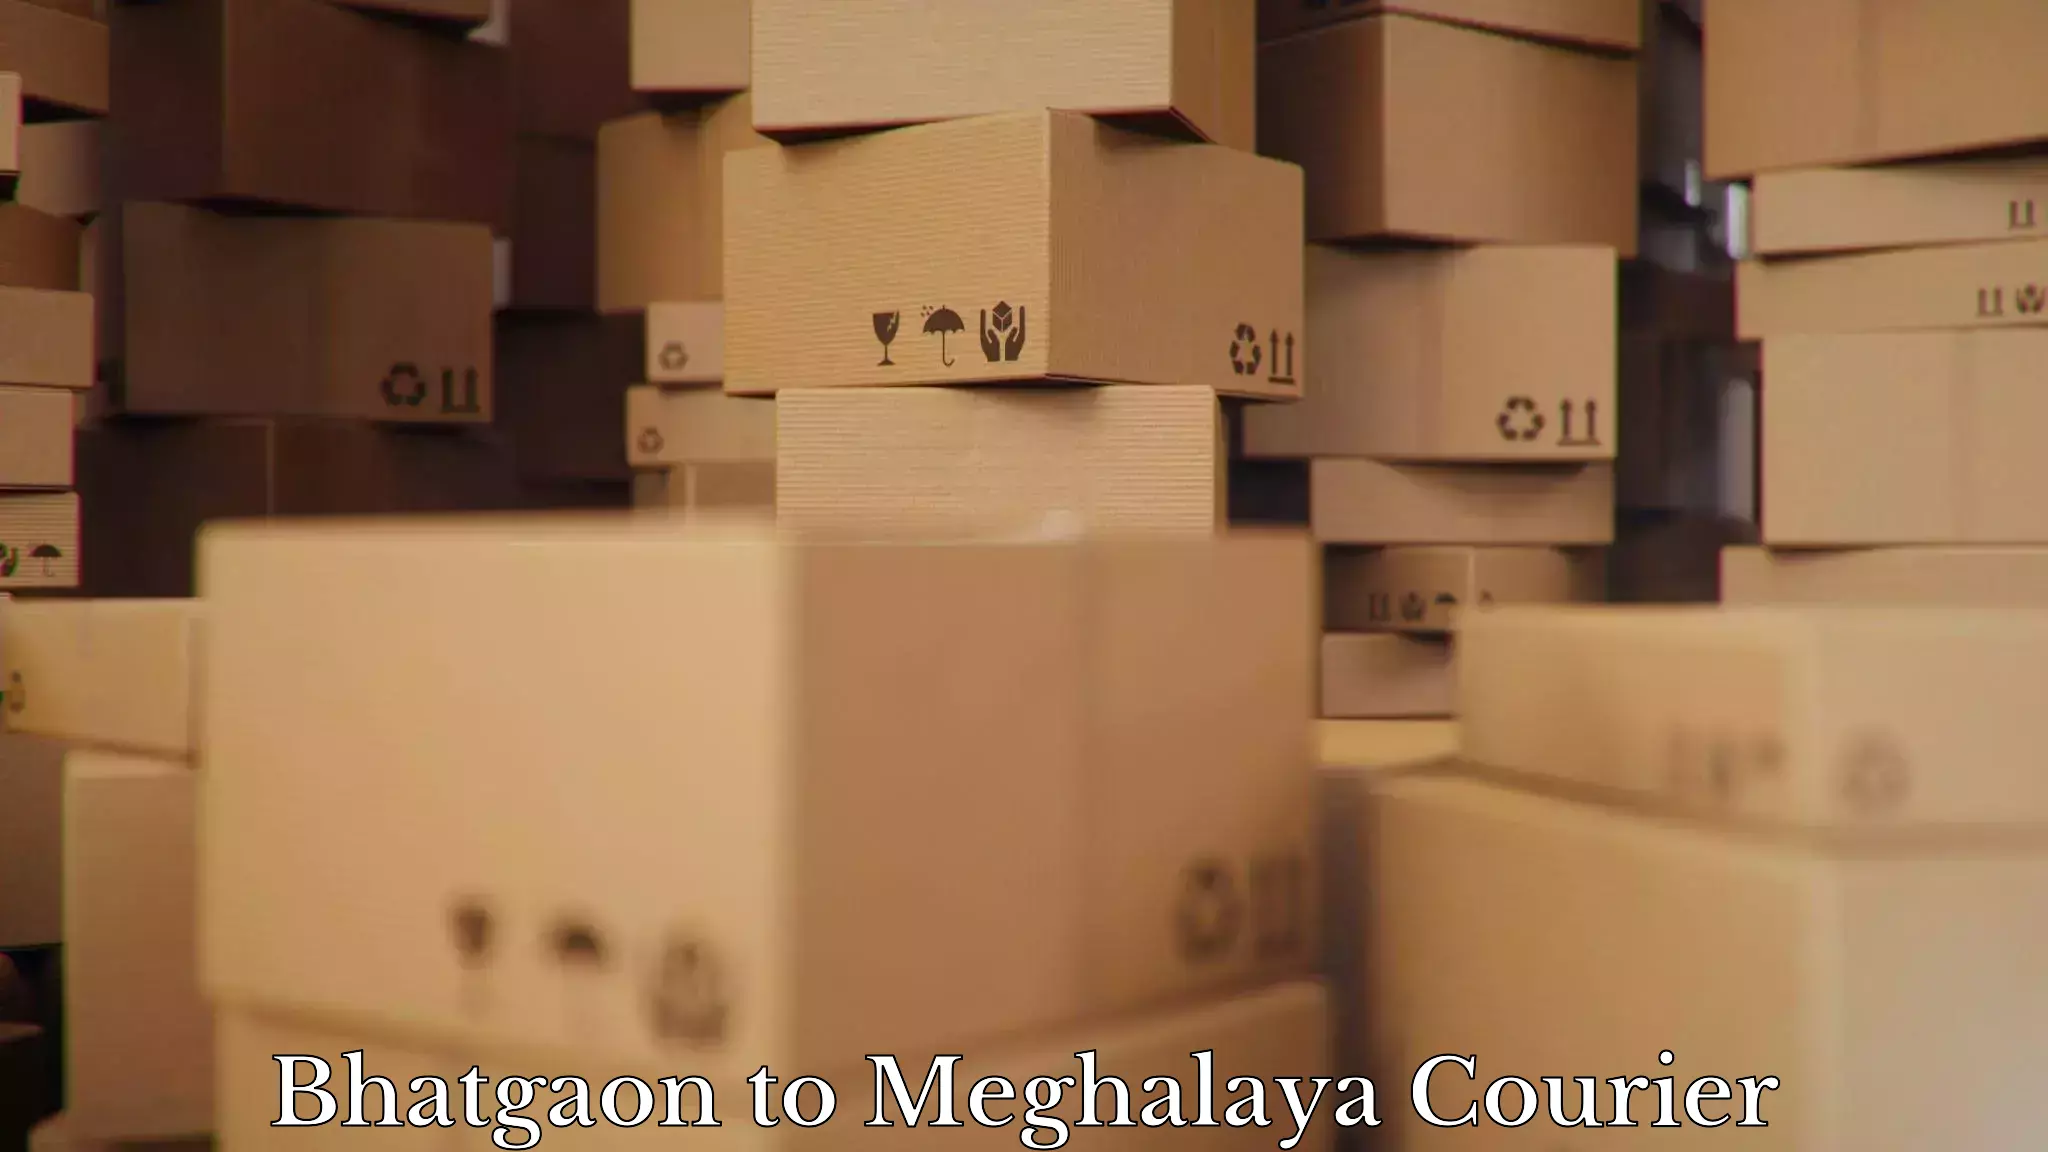 Quality moving company in Bhatgaon to Meghalaya